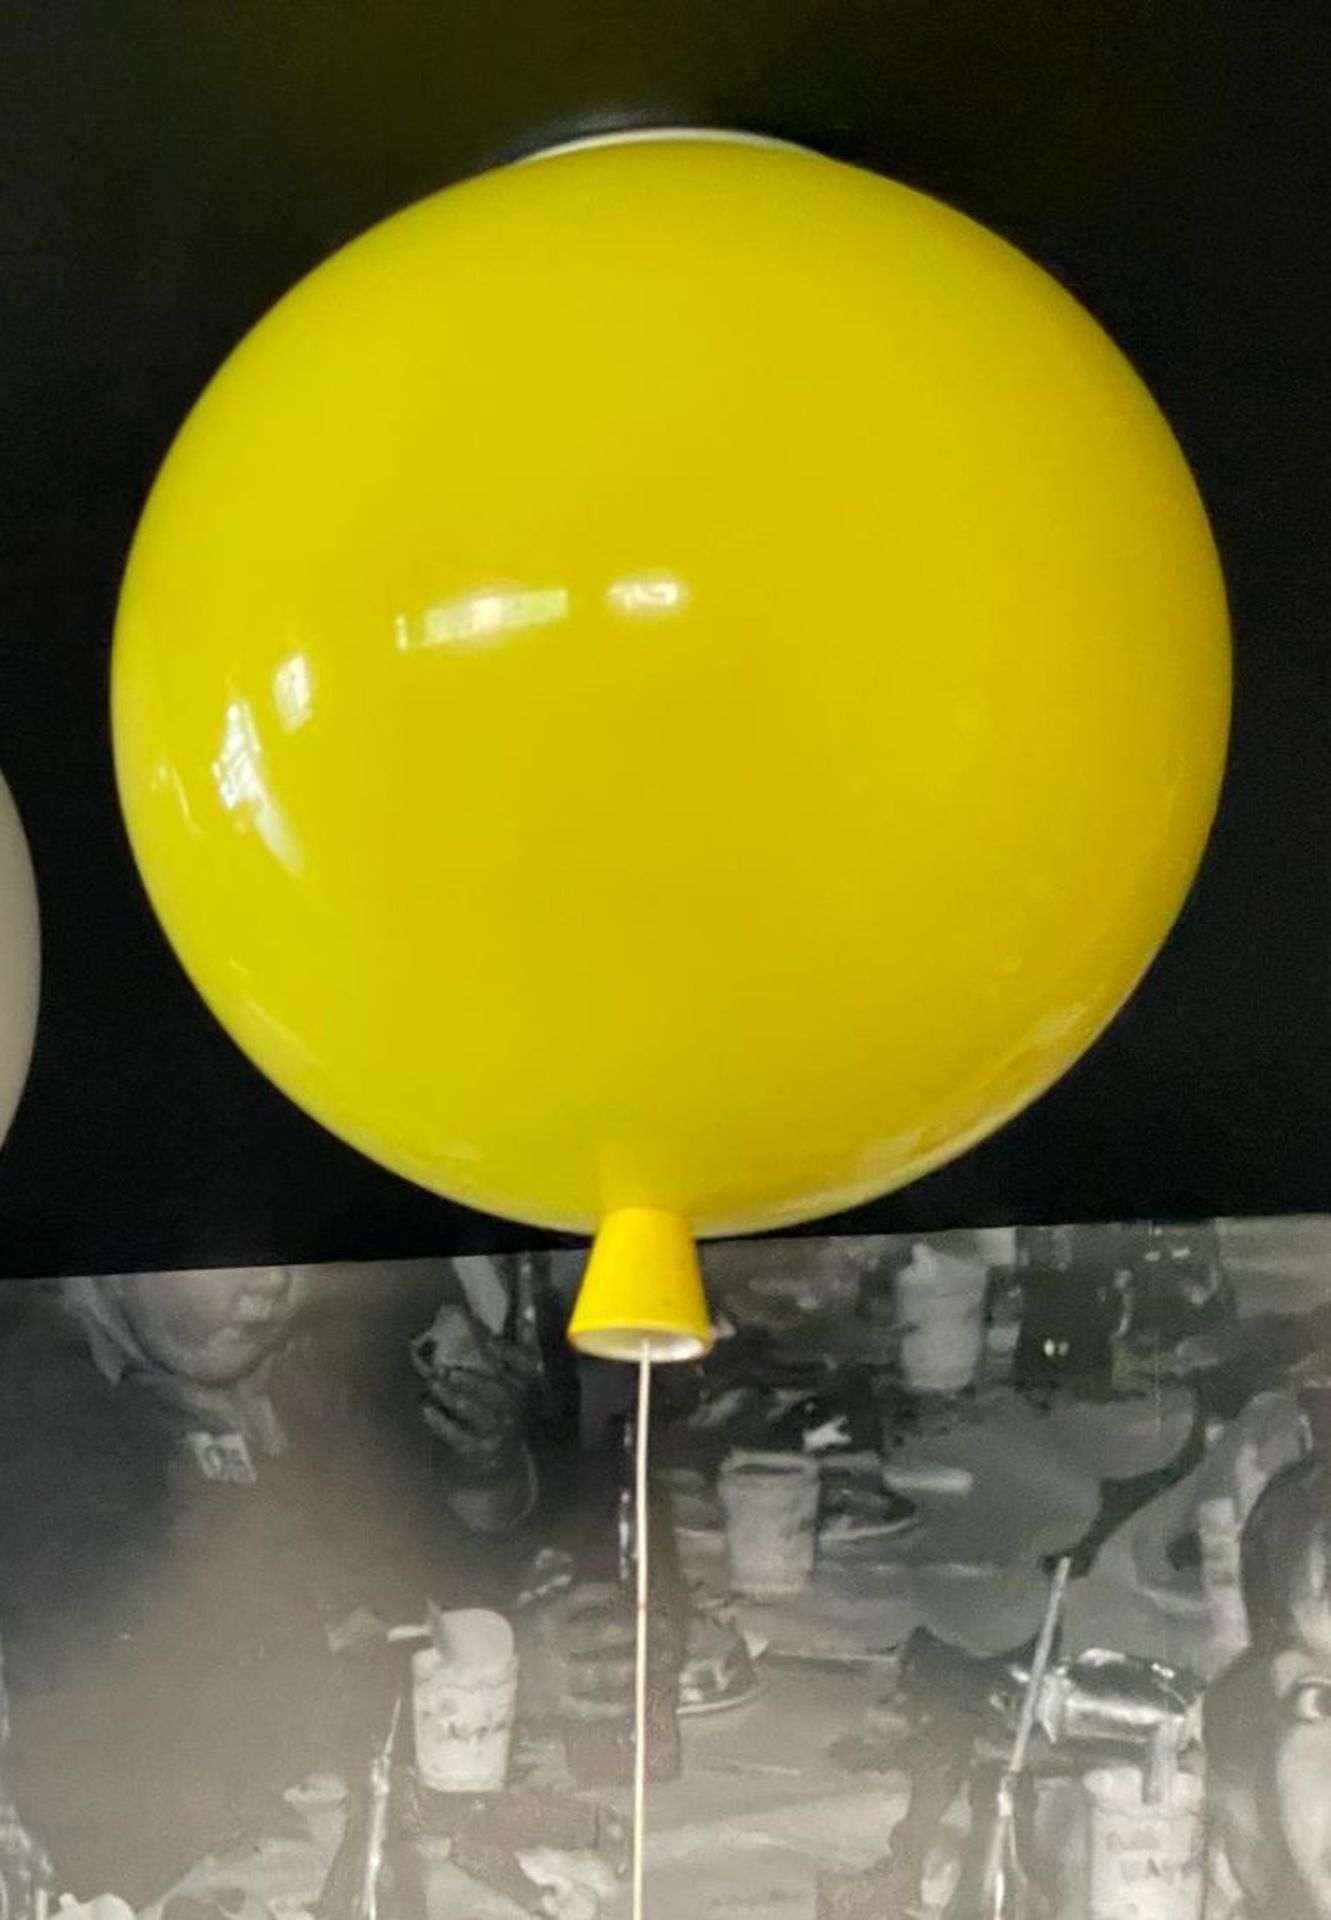 1 x BROKIS / BORIS KLIMEK "Memory" Balloon-shaped Designer Glass Light Fitting, Yellow - RRP £390.00